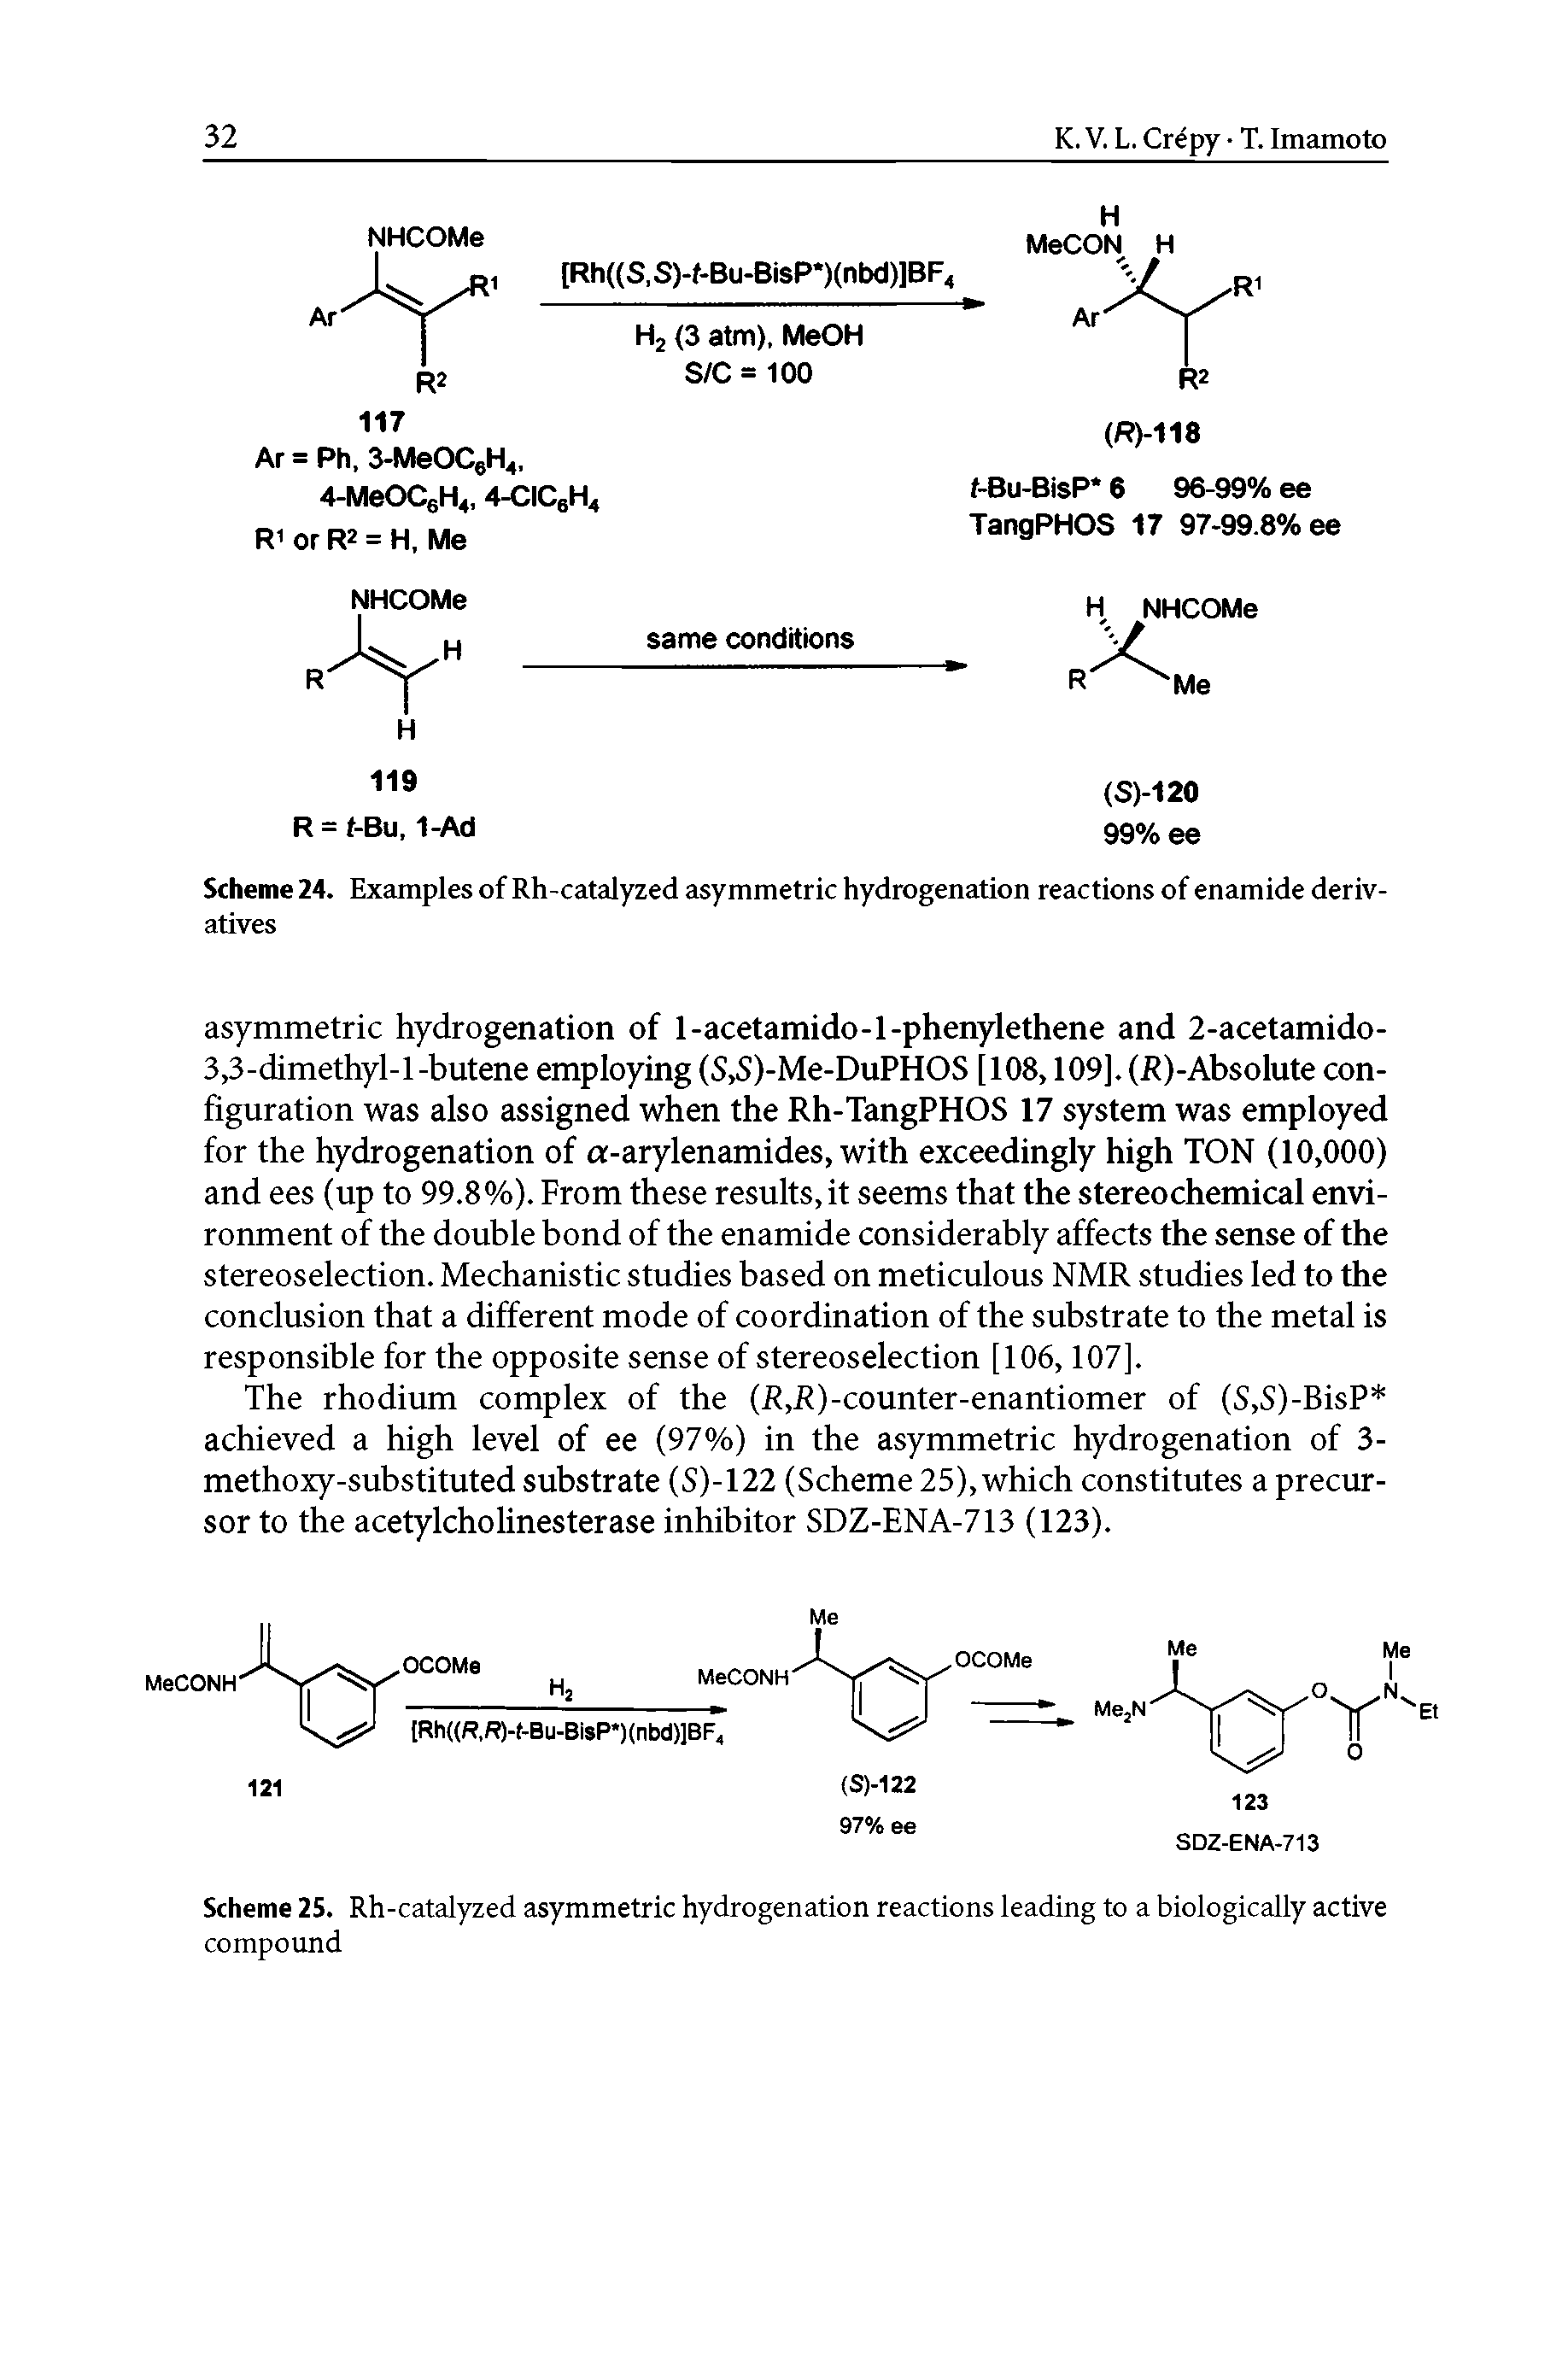 Scheme 24. Examples of Rh-catalyzed asymmetric hydrogenation reactions of enamide derivatives...